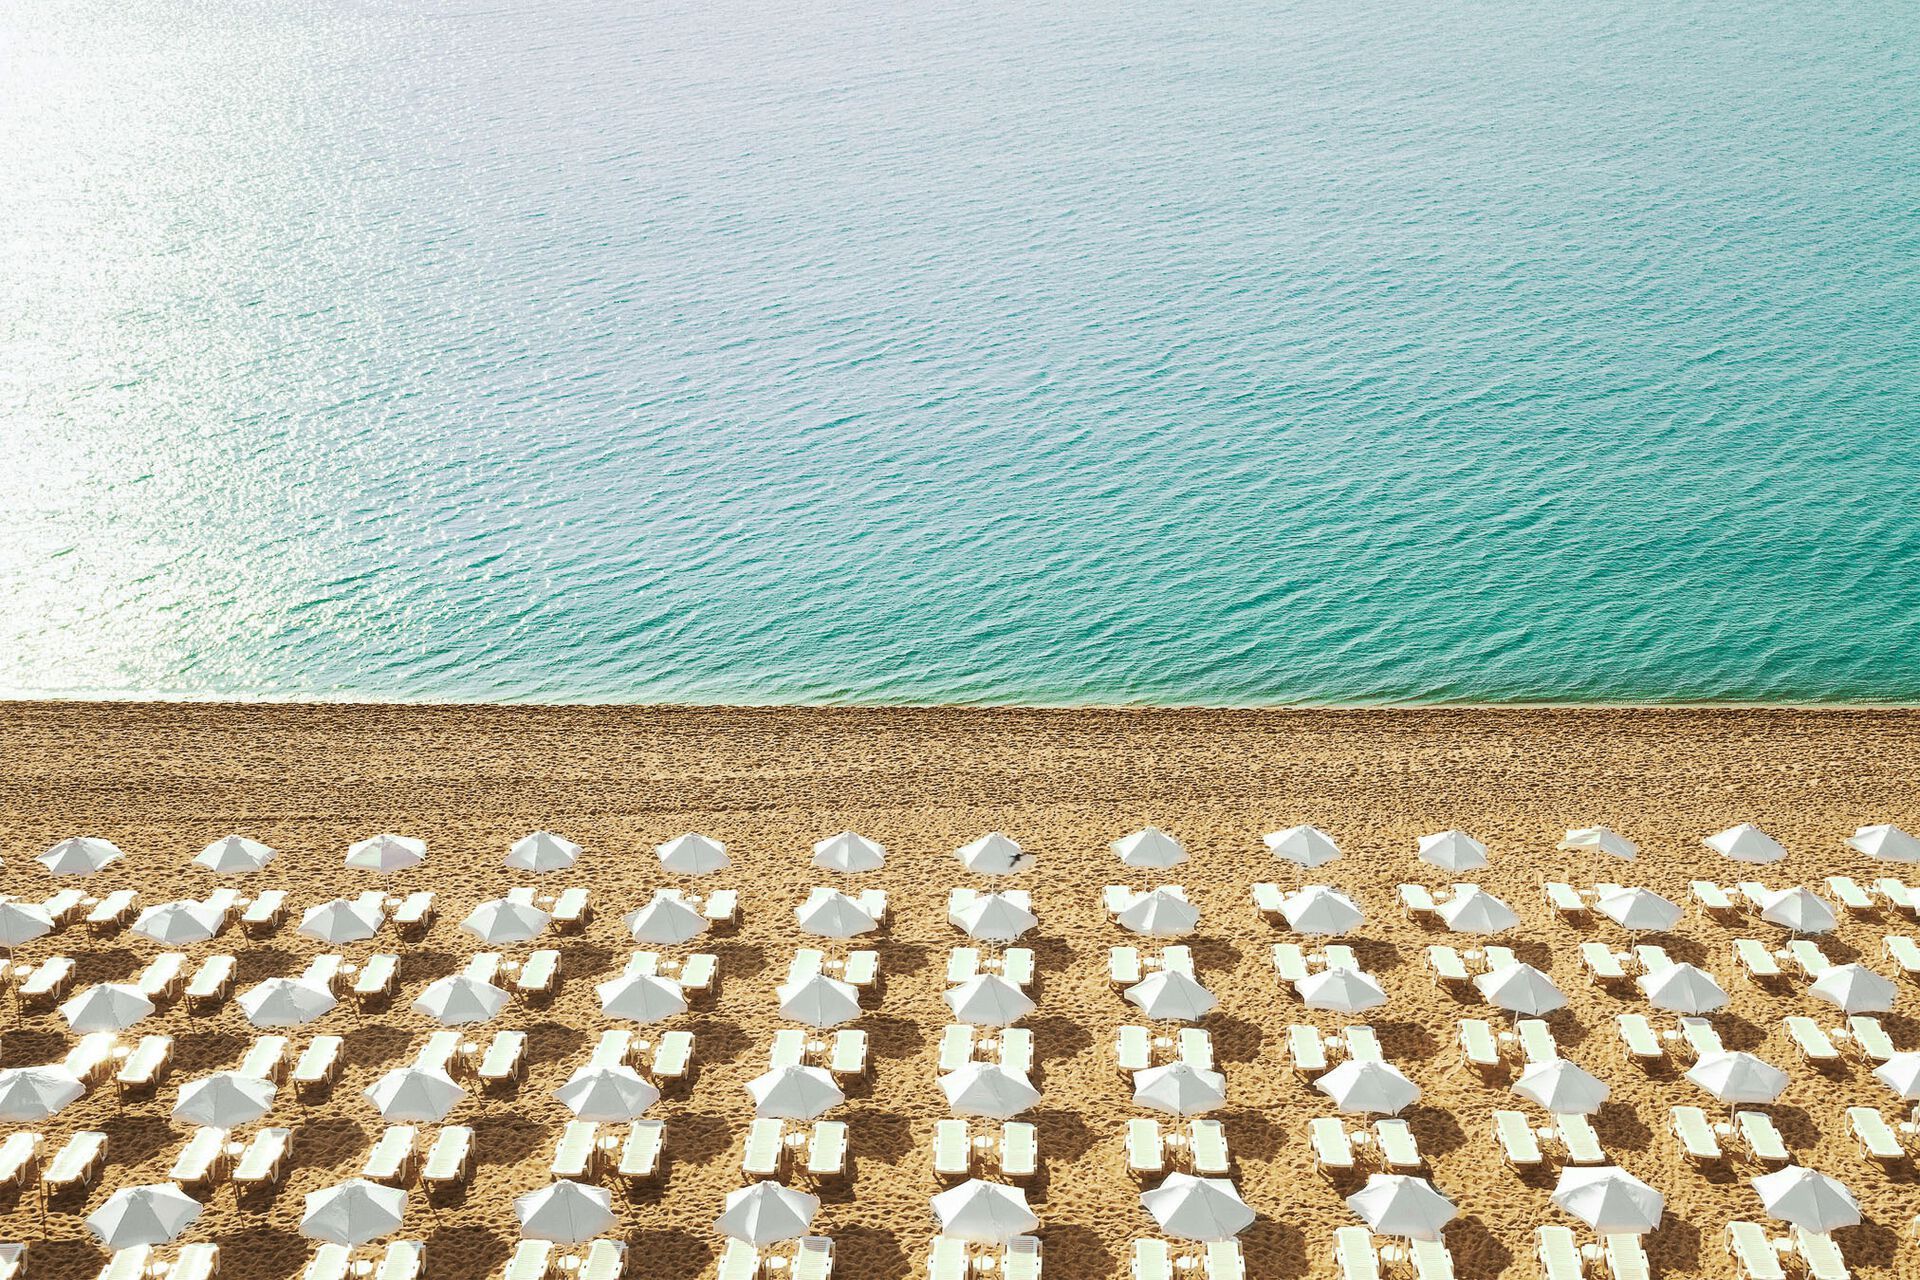 Bulgarie - Sables d'Or - Hôtel Moko Beach by Grifid 4*